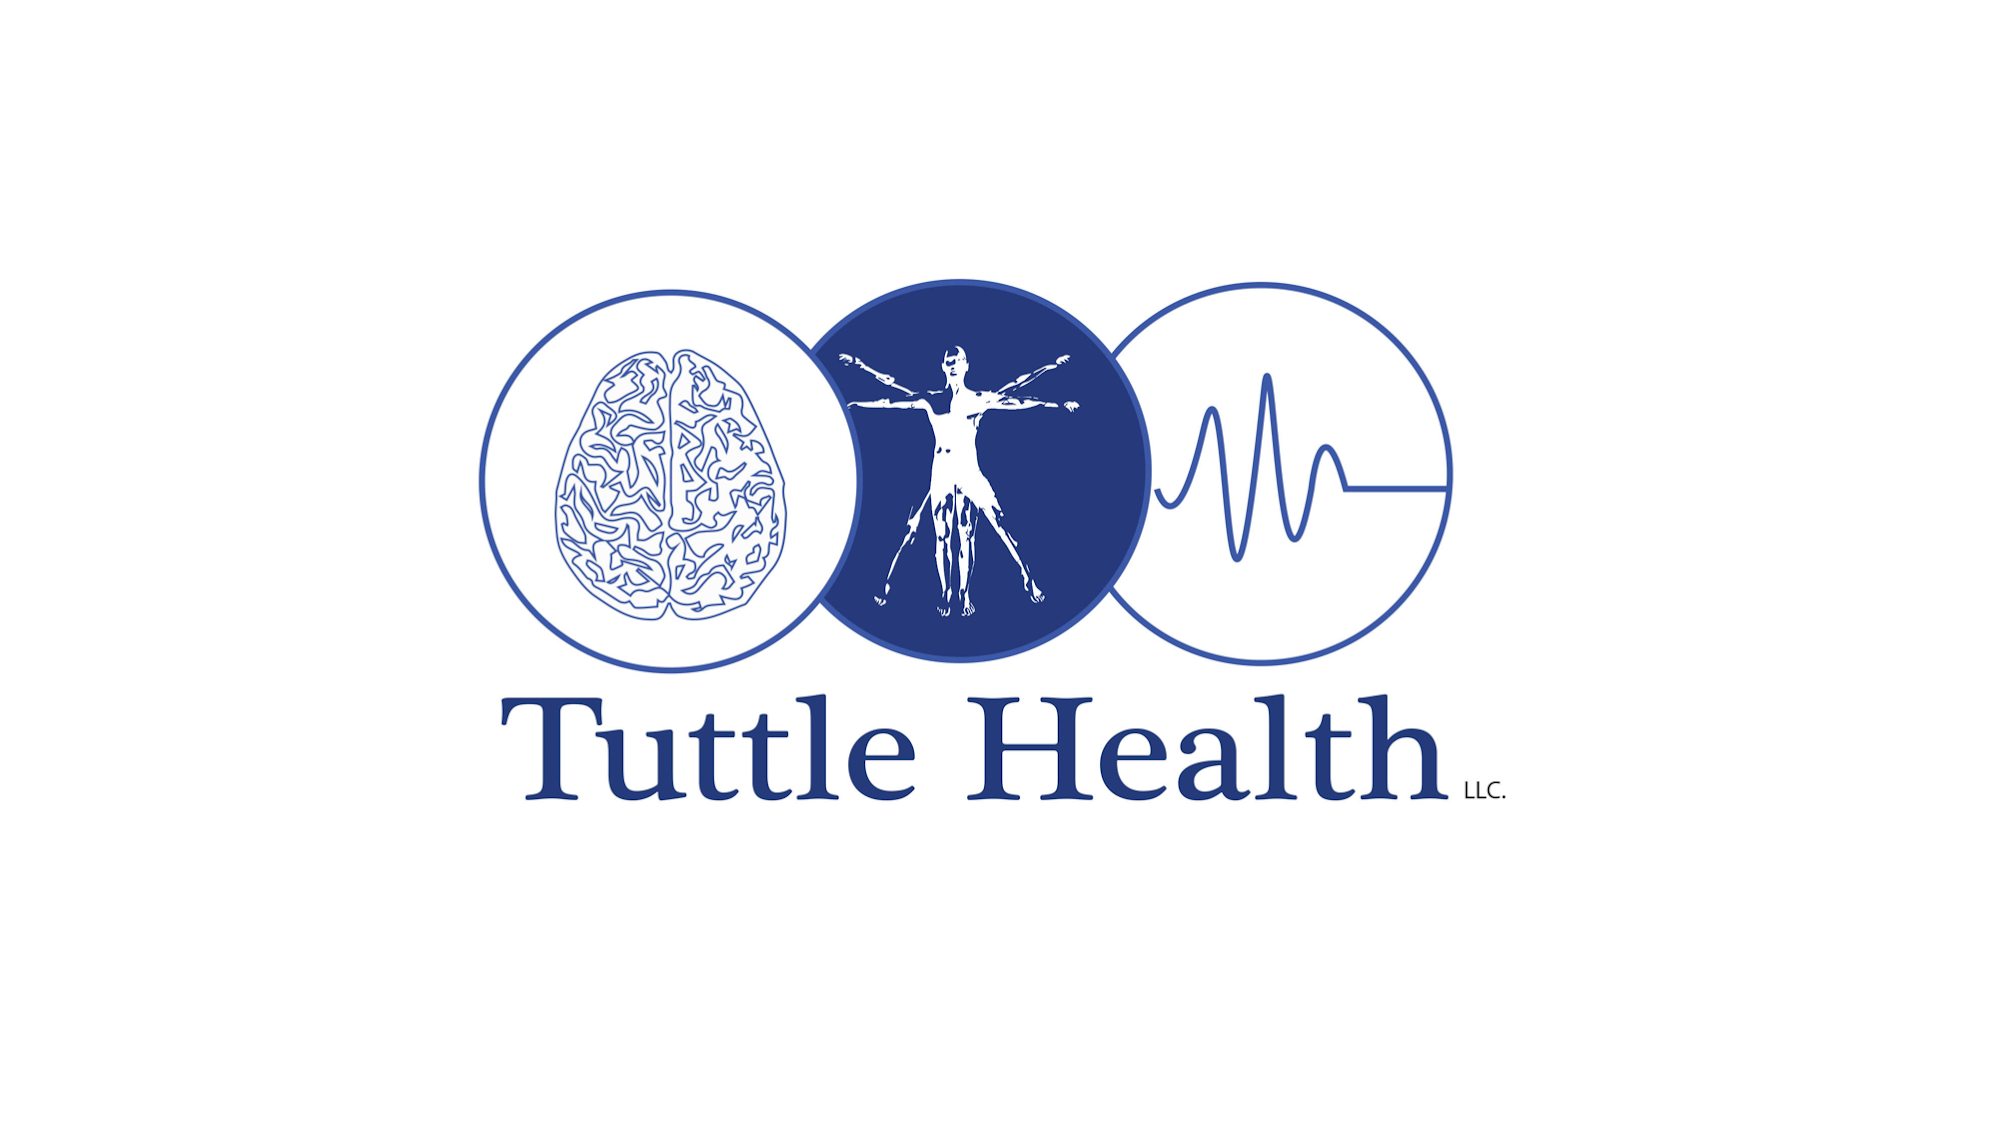 Tuttle Health, LLC